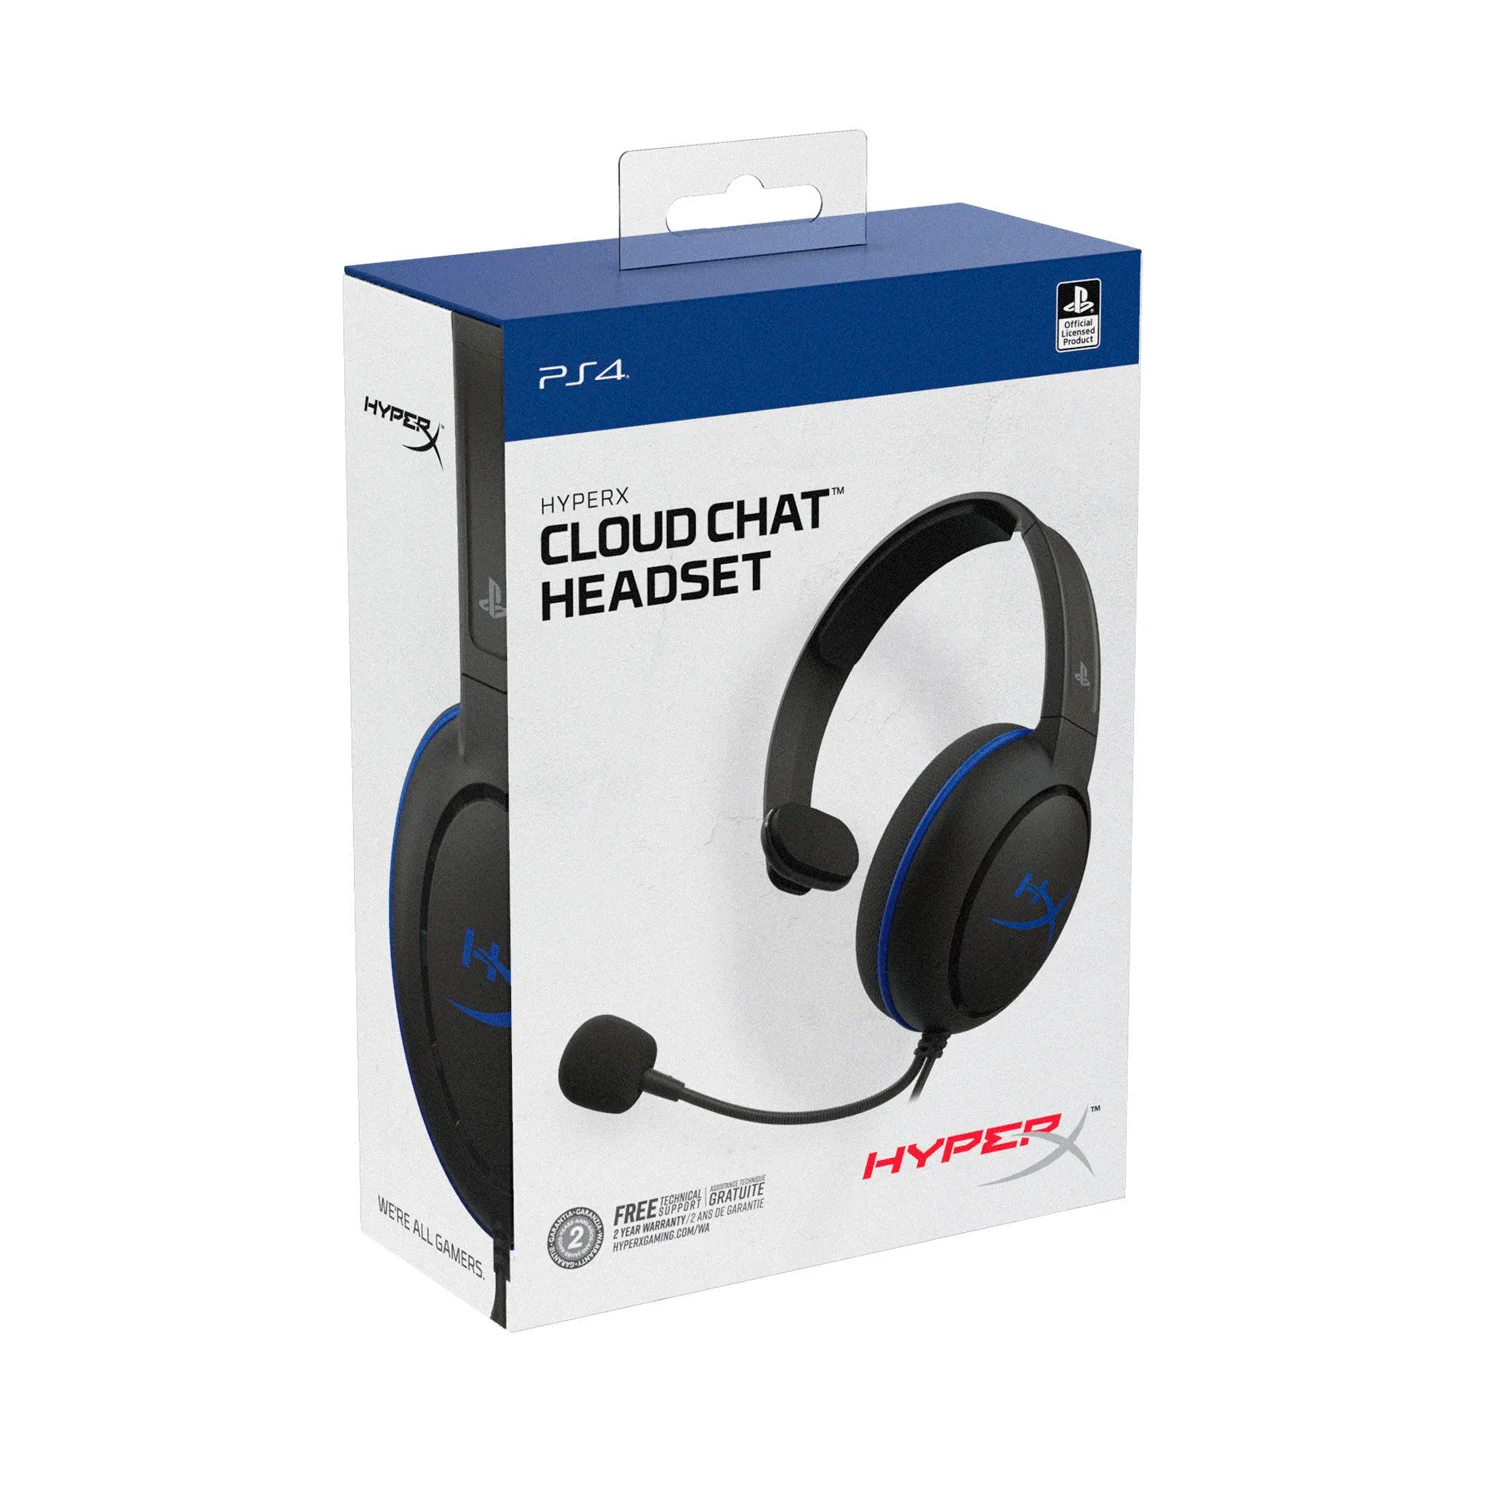 Headset Gamer Hyper X Cloud Chat para PS4 - Preto e Azul (HX-HSCCHS-BK)